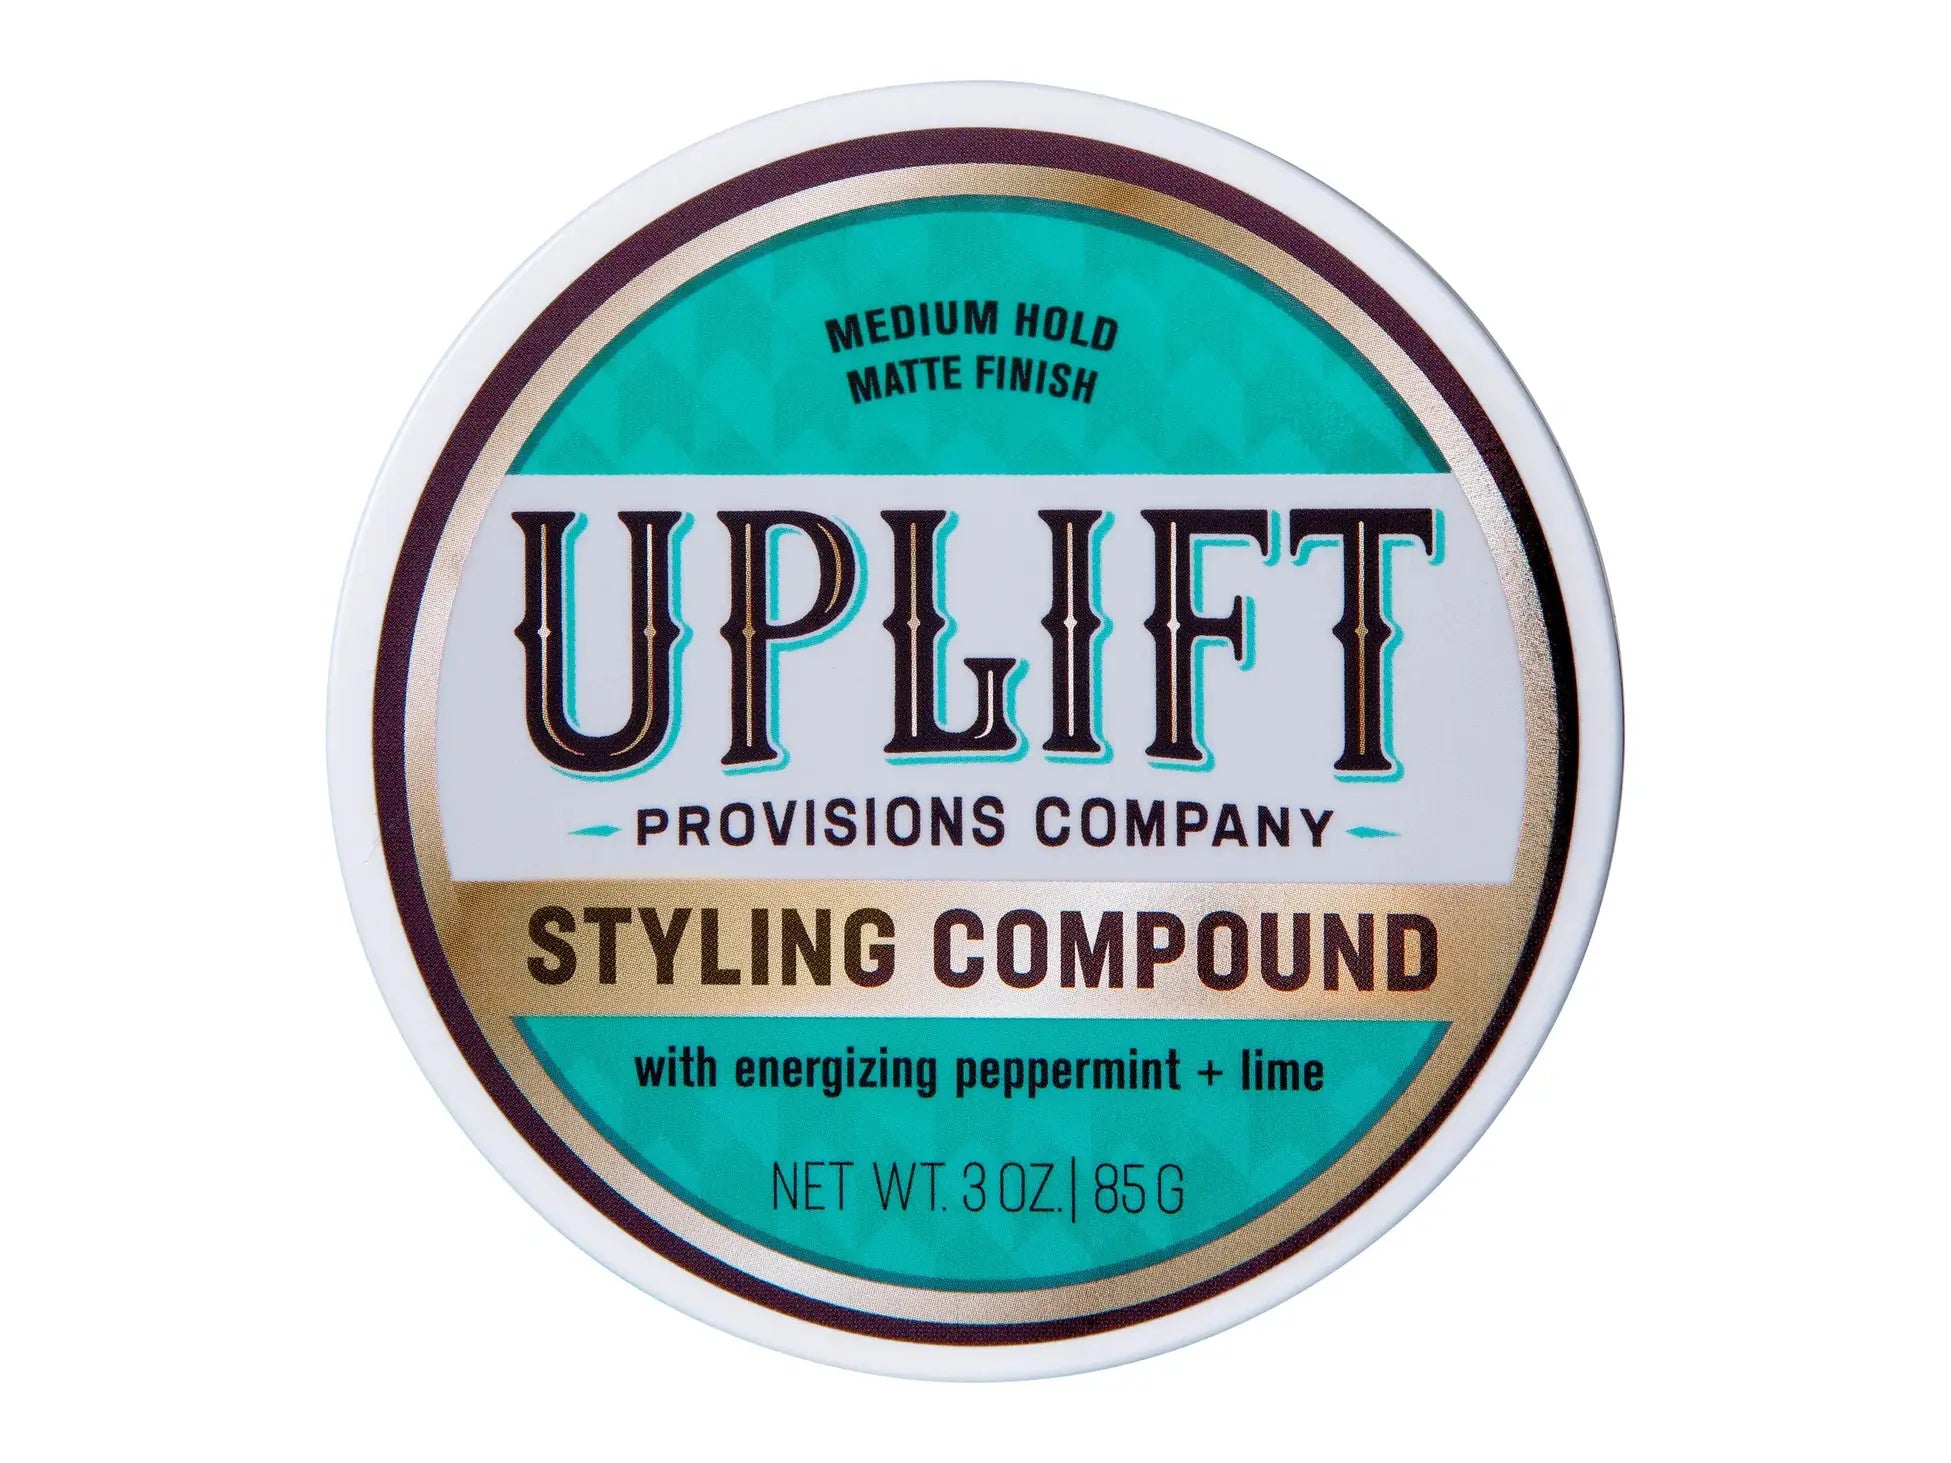 UPLIFT Styling Compound (3 oz/ 85g) 12 Pack